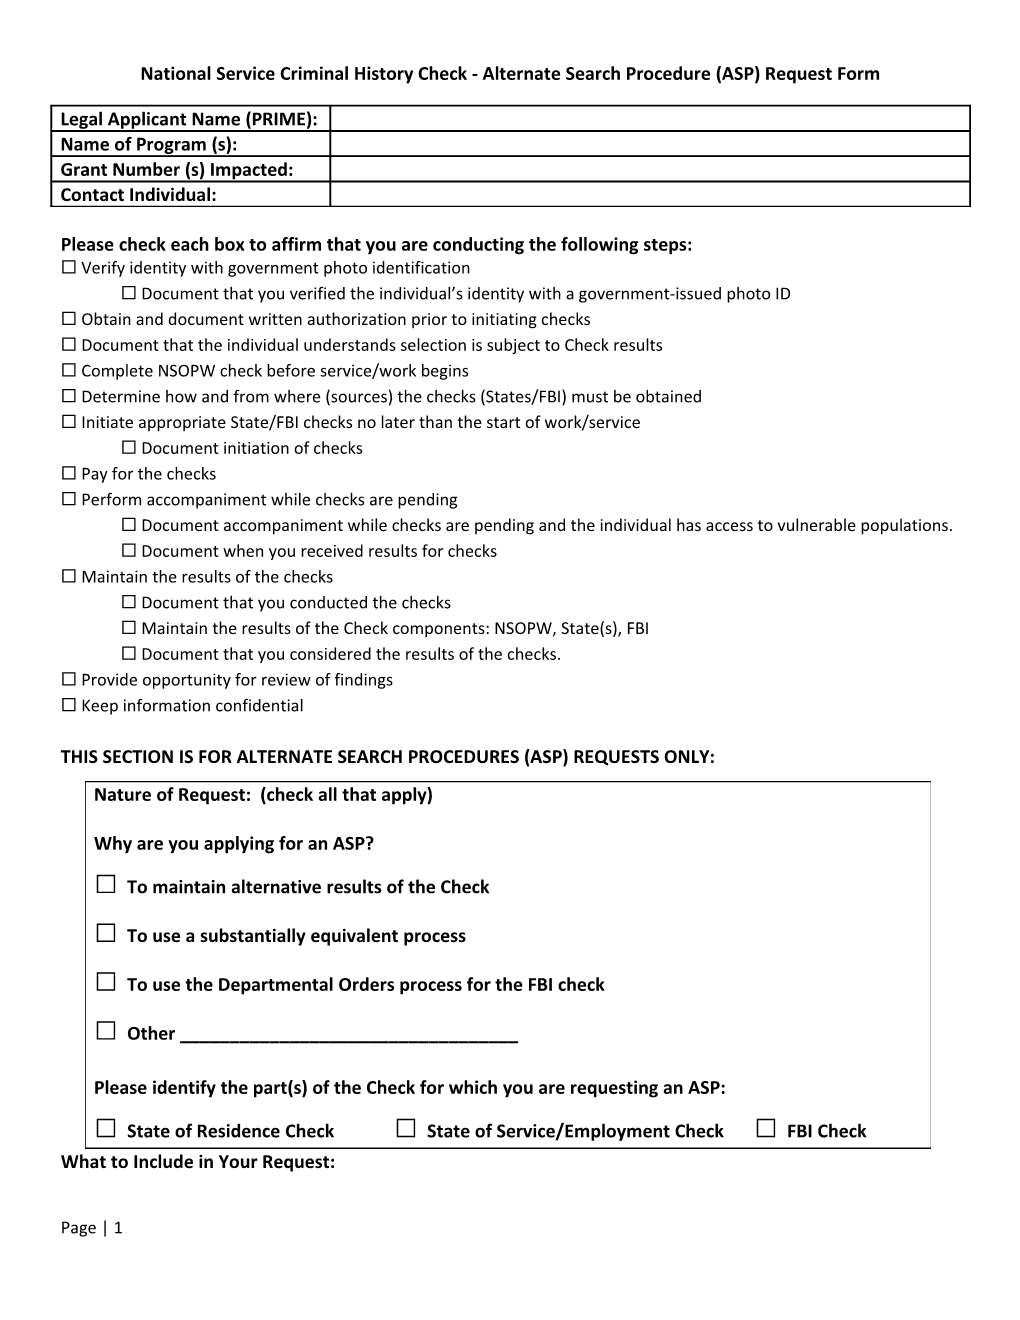 National Service Criminal History Check - Alternate Search Procedure (ASP) Request Form